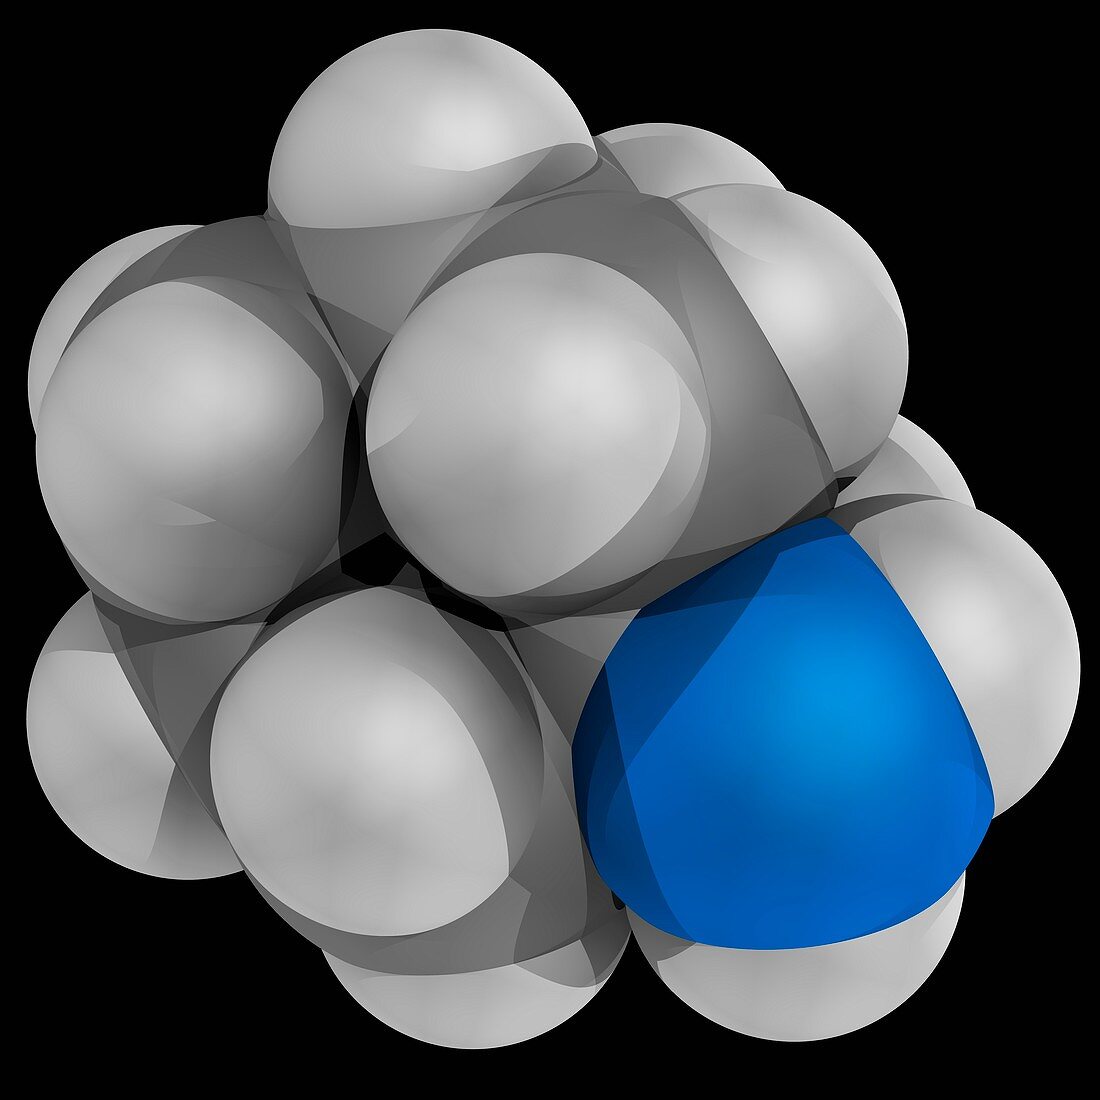 Amantadine drug molecule